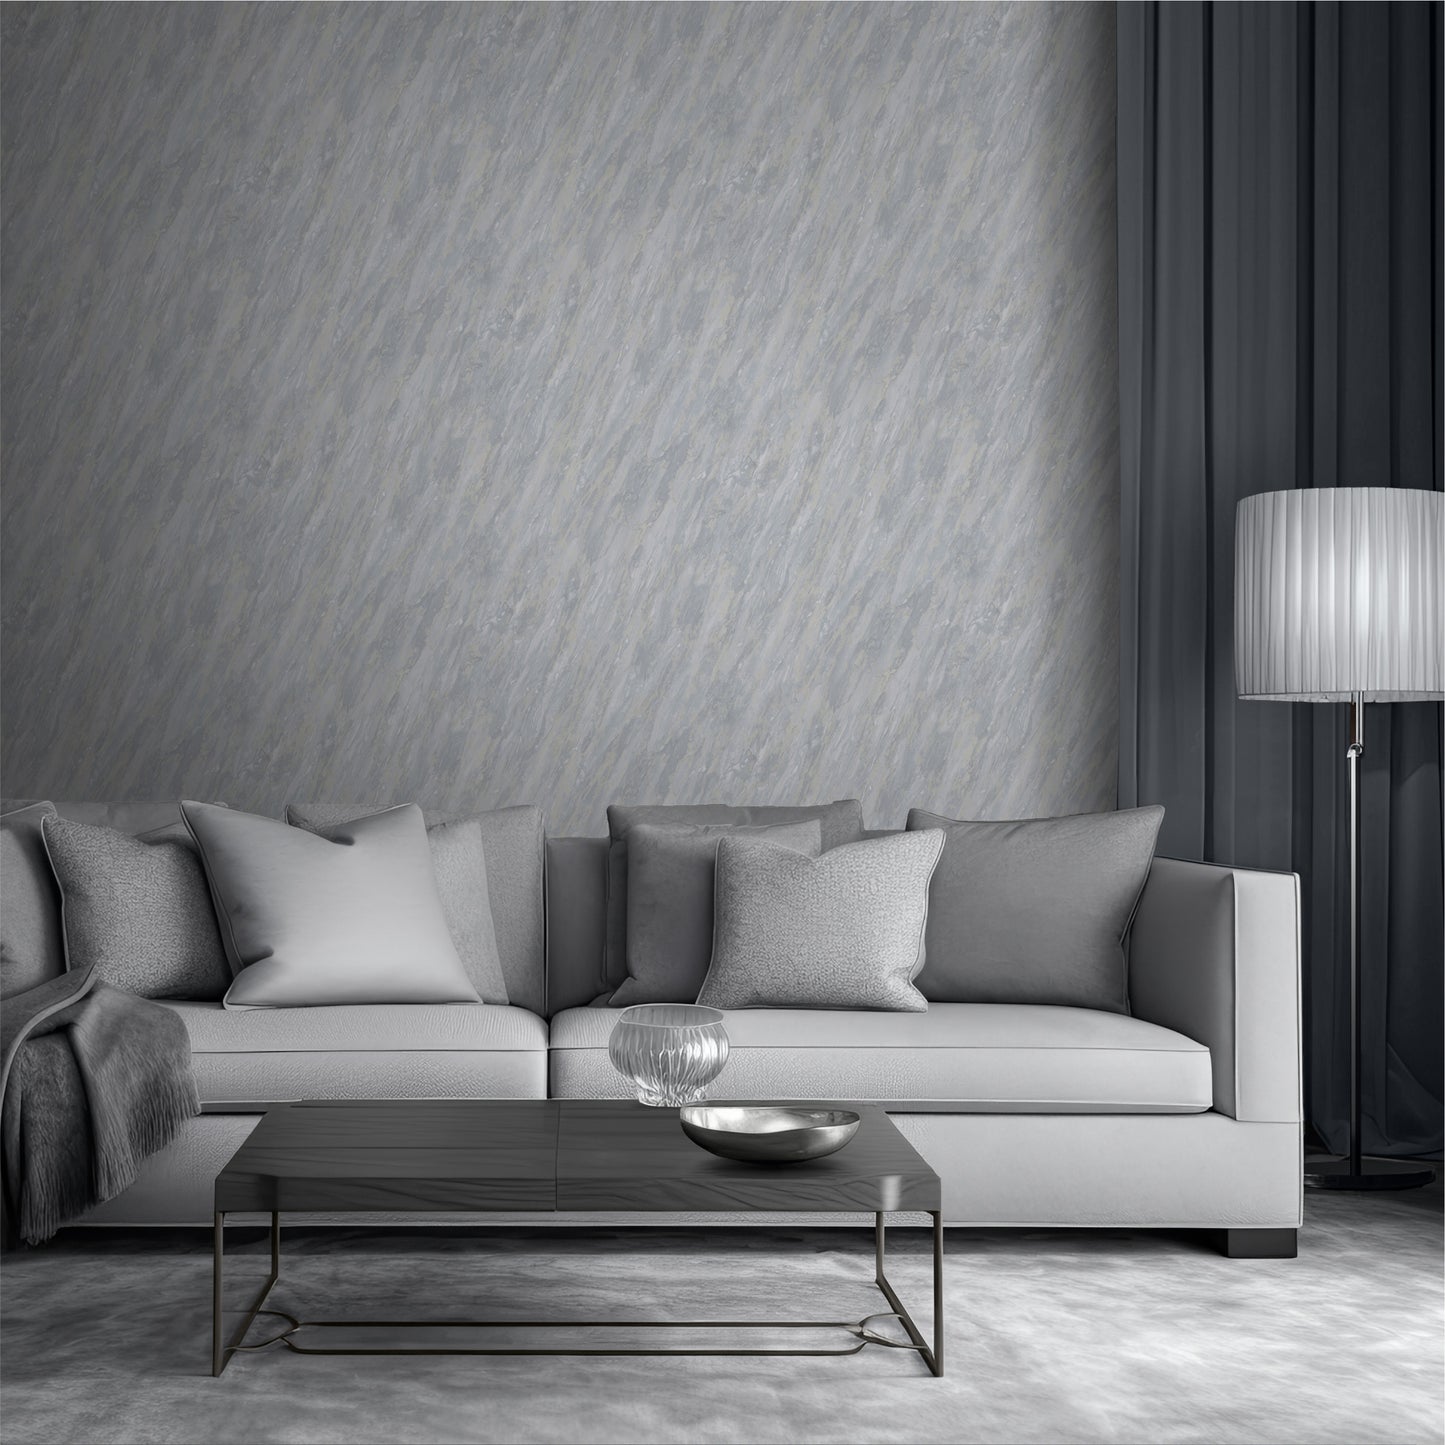 Muriva Venezia Marble Light Grey Wallpaper (M66309)